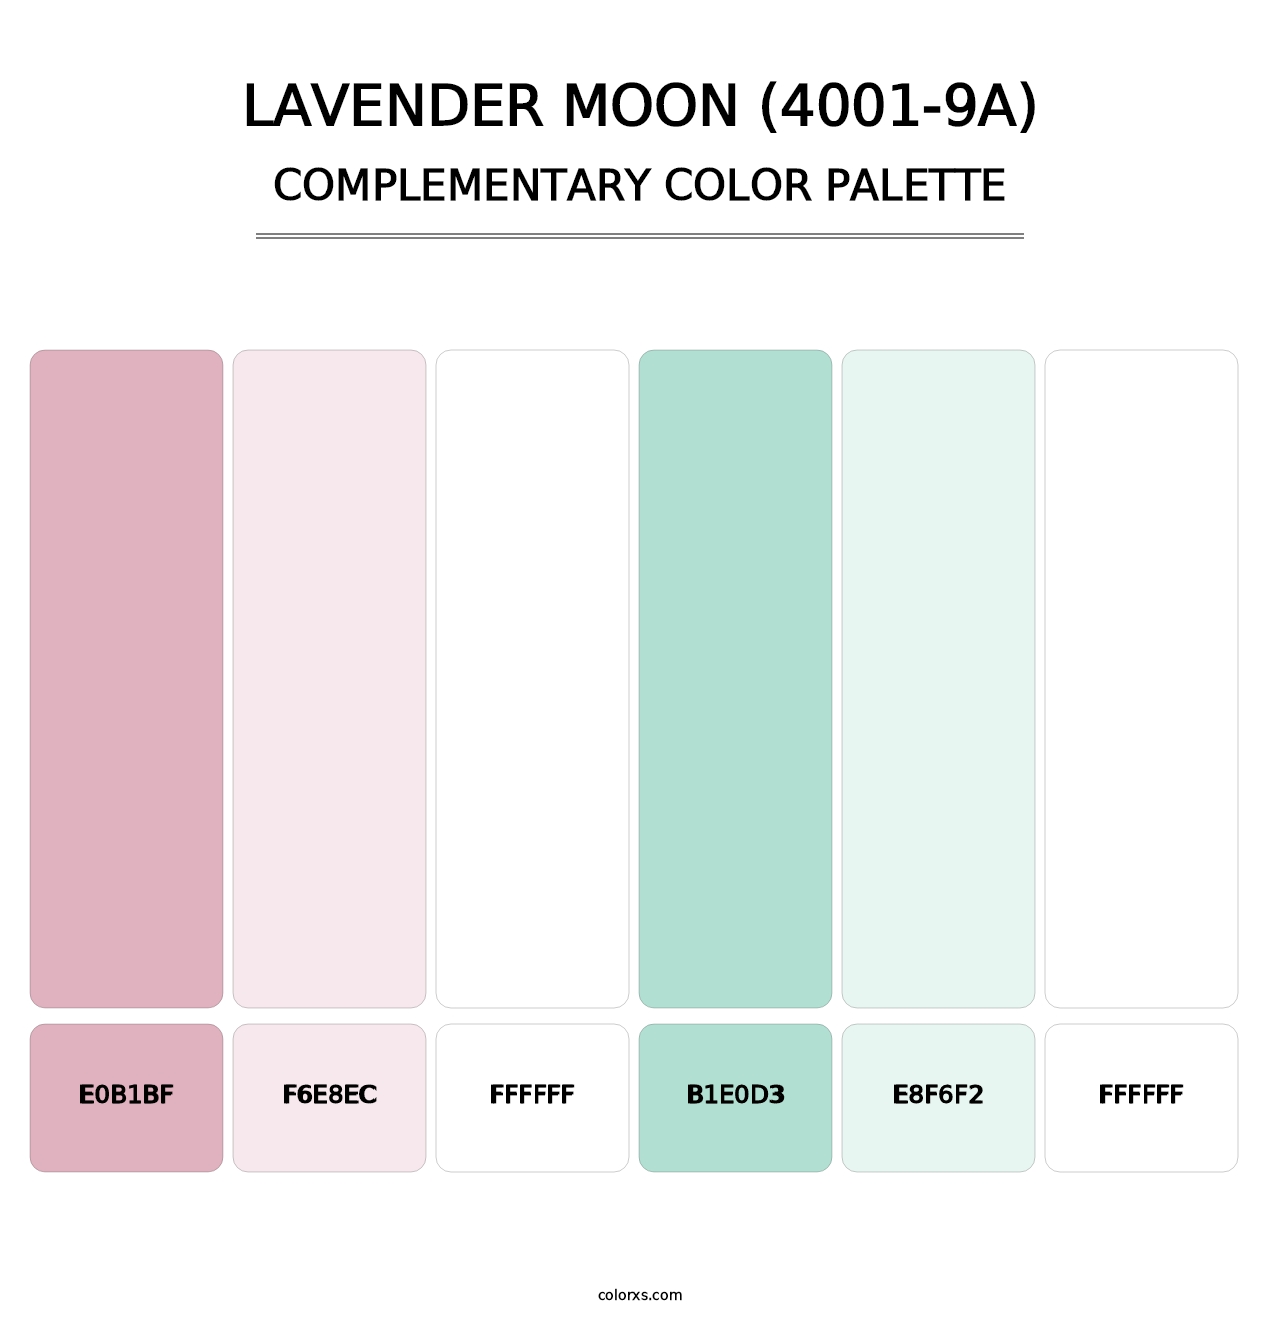 Lavender Moon (4001-9A) - Complementary Color Palette